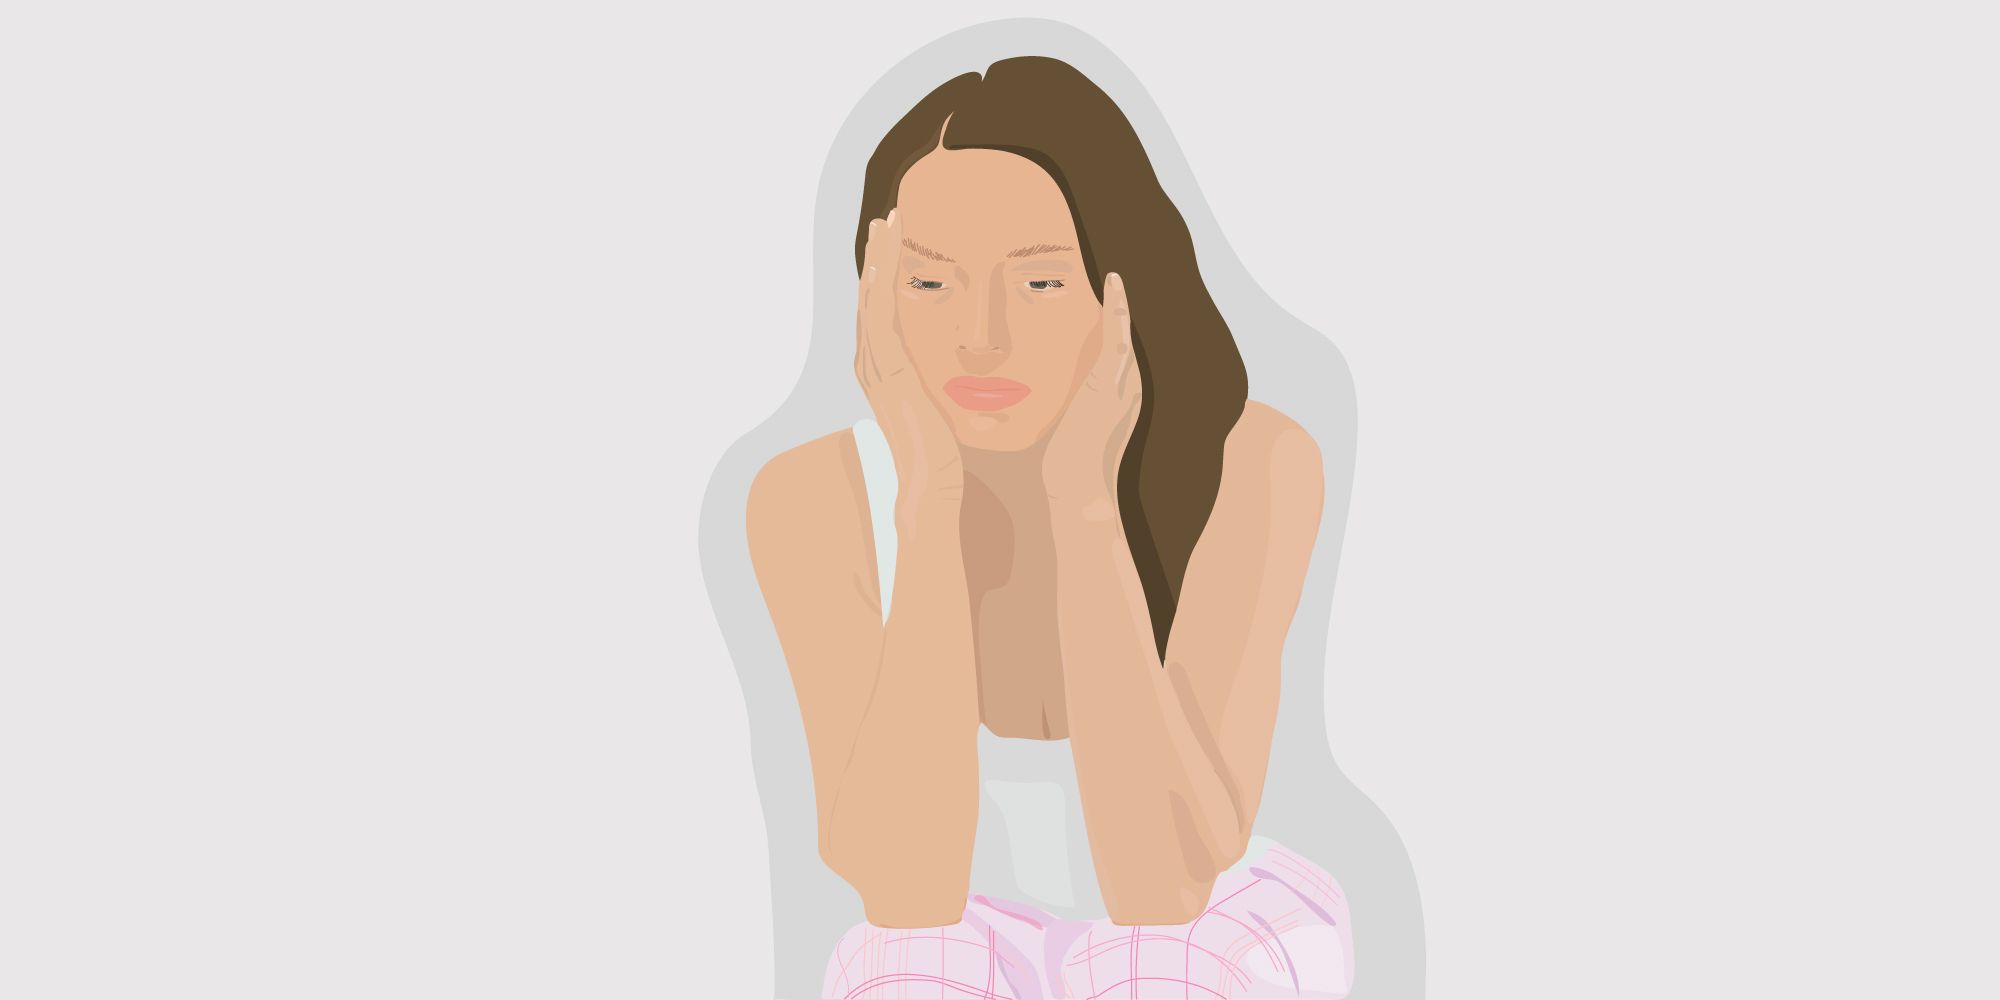 miscarriage symptoms   women's health uk